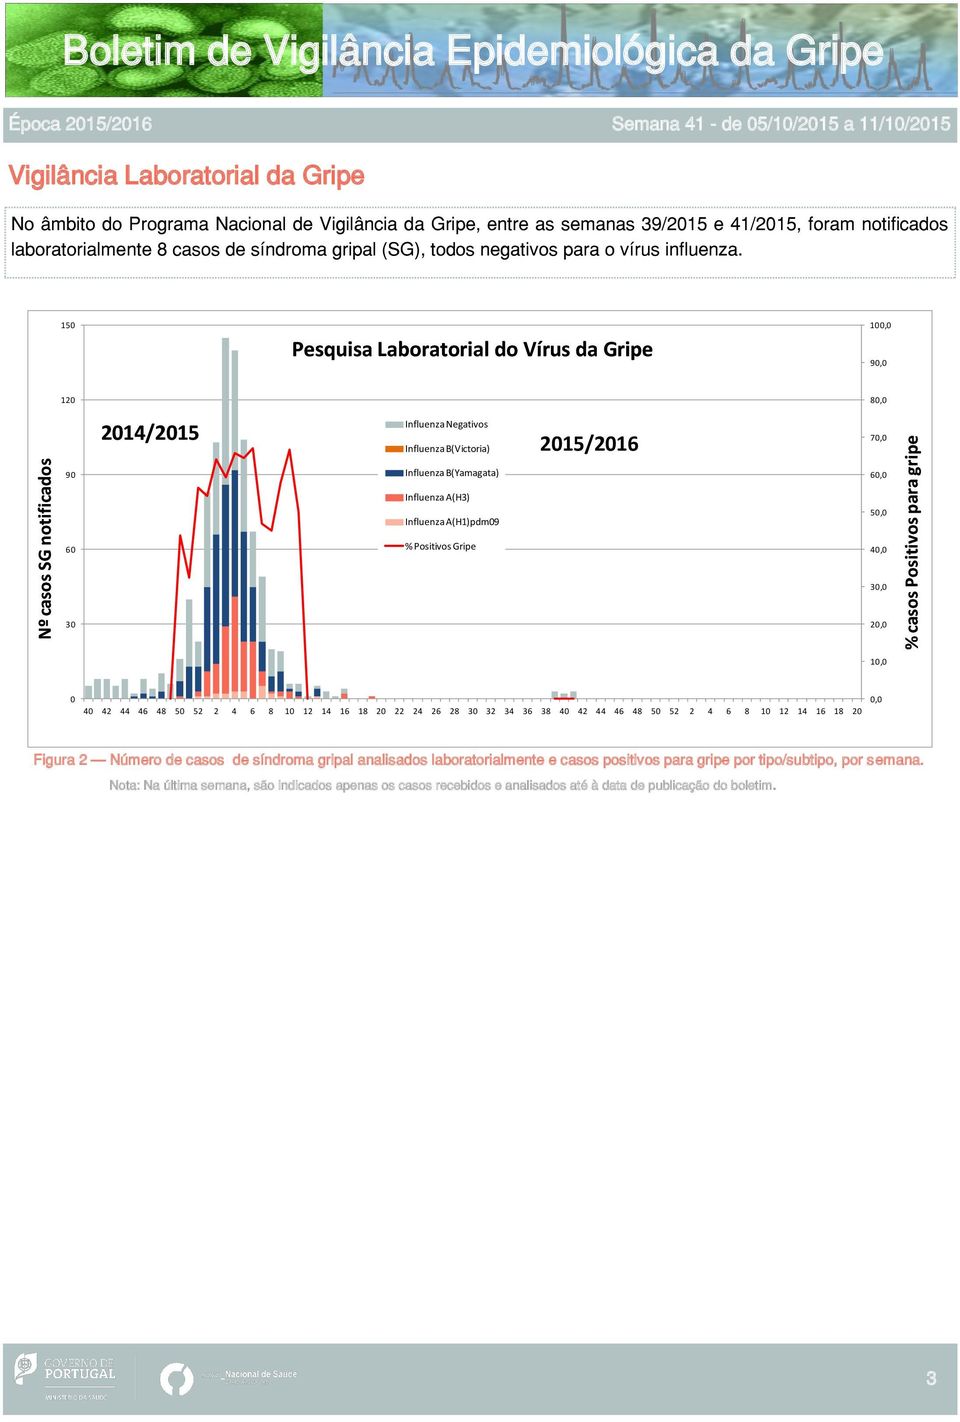 15 Pesquisa Laboratorial do Vírus da Gripe 1, 9, 12 8, 214/215 Influenza Negativos Influenza B(Victoria) 215/216 7, 9 Influenza B(Yamagata) 6, 6 Influenza A(H3) Influenza A(H1)pdm9 % Positivos Gripe